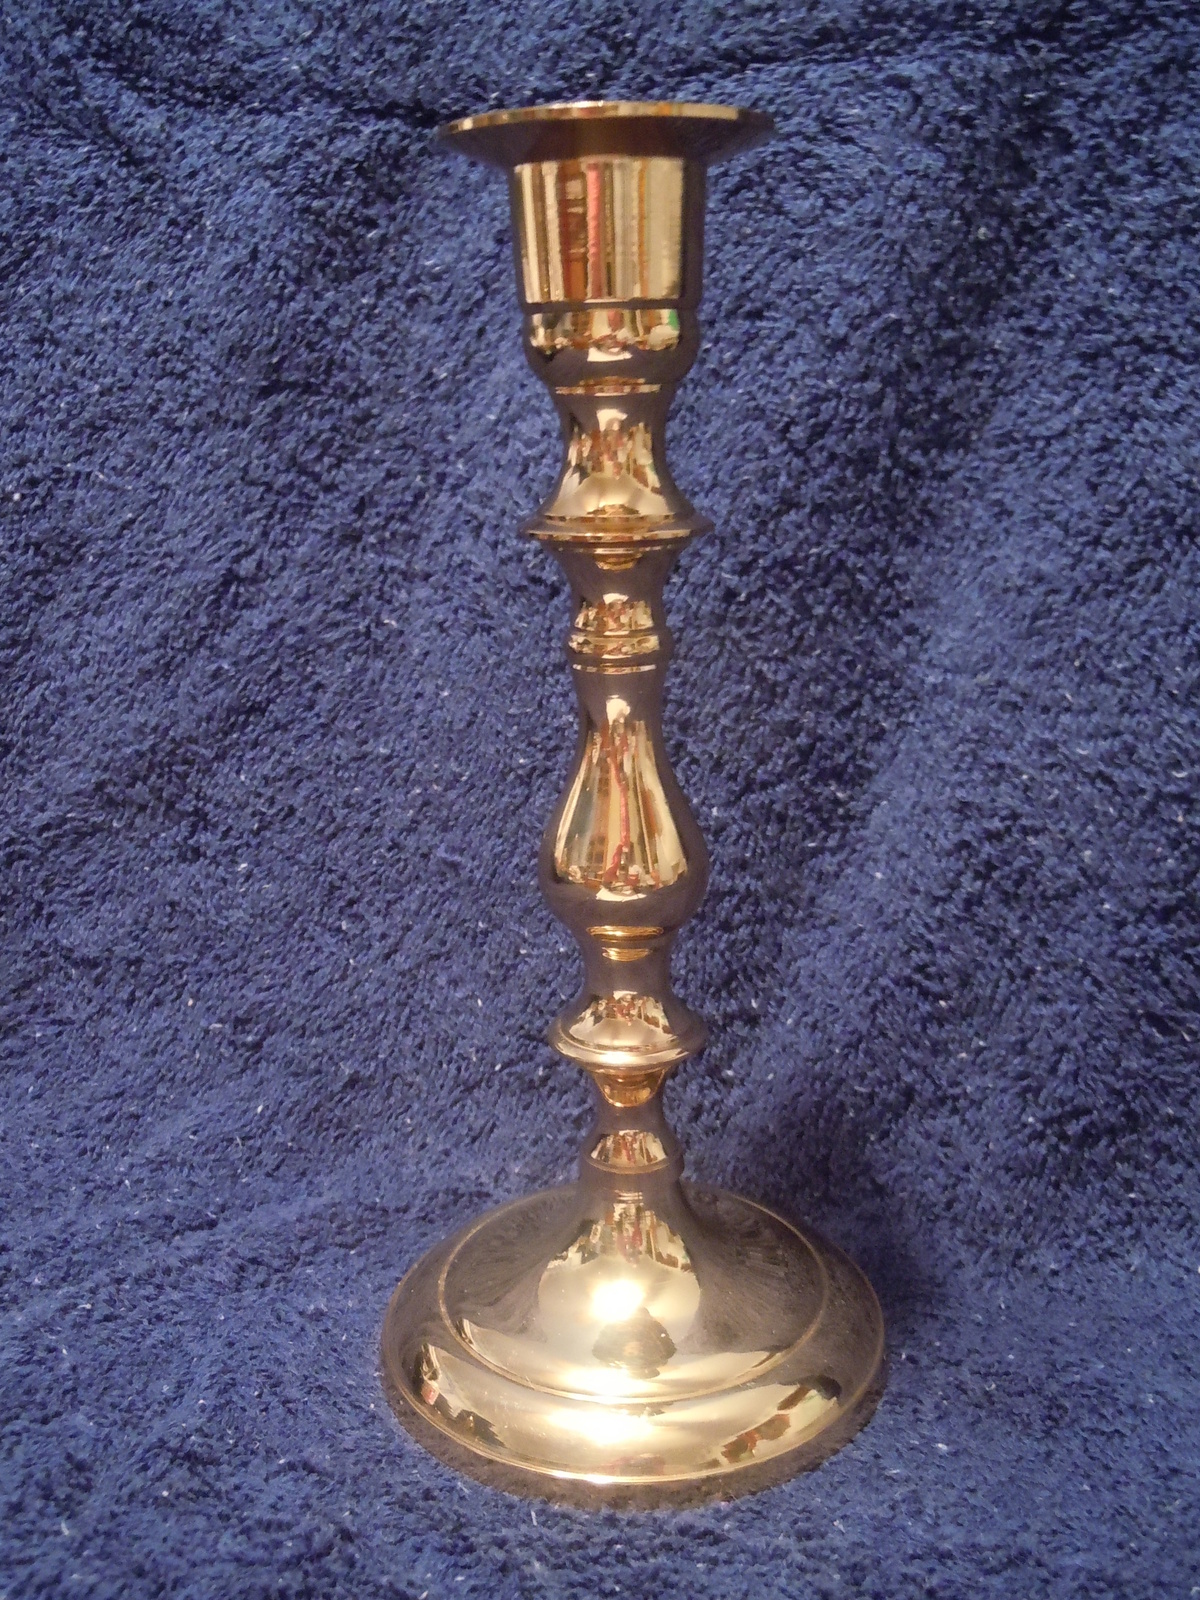 Brass Candle Stick Holder - $6.99